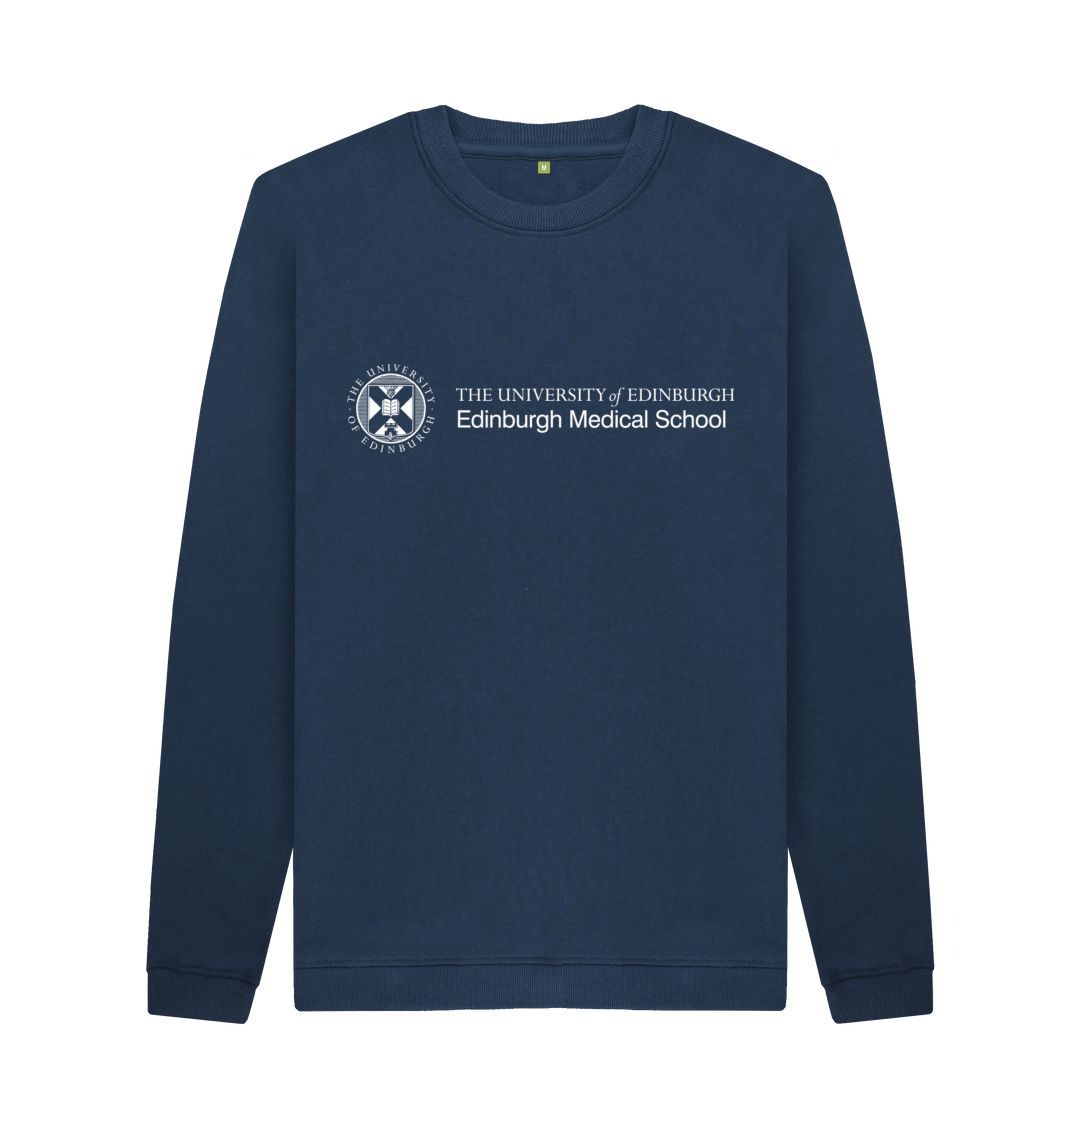 Navy Sweatshirt with white University crest and text that reads ' University of Edinburgh : Edinburgh Medical School'